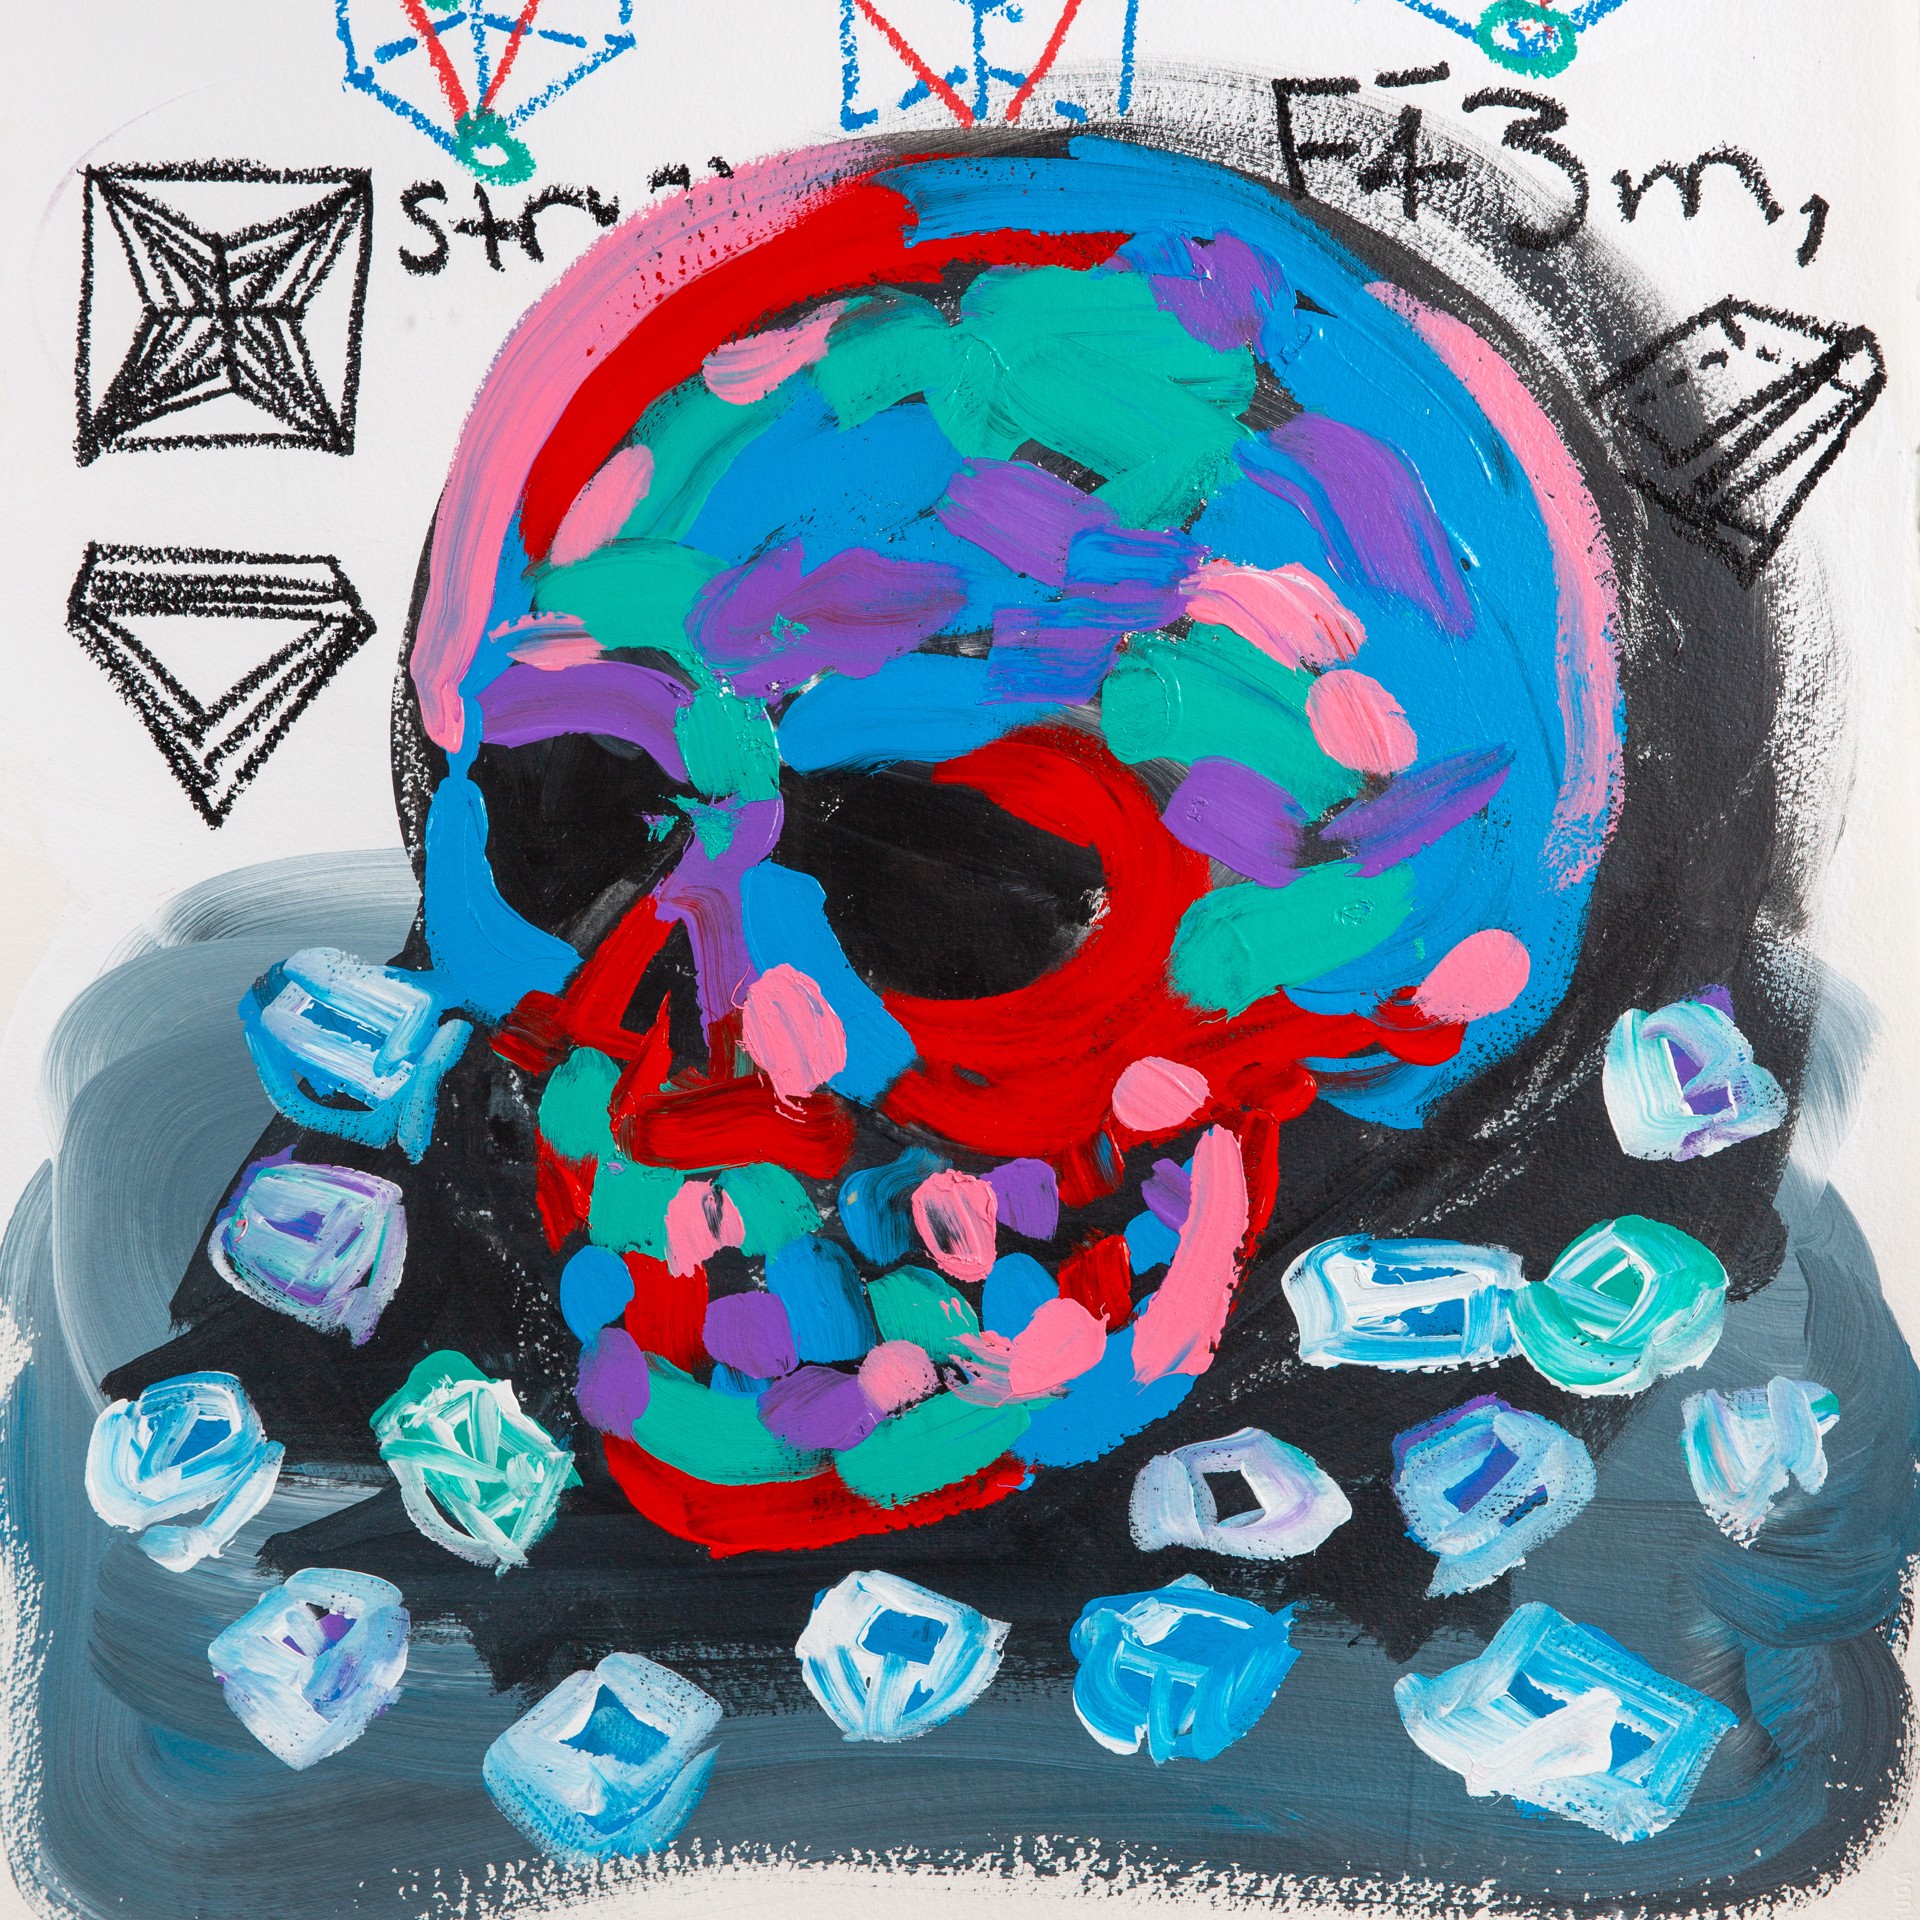 Diamond Skull II by Bradley Theodore